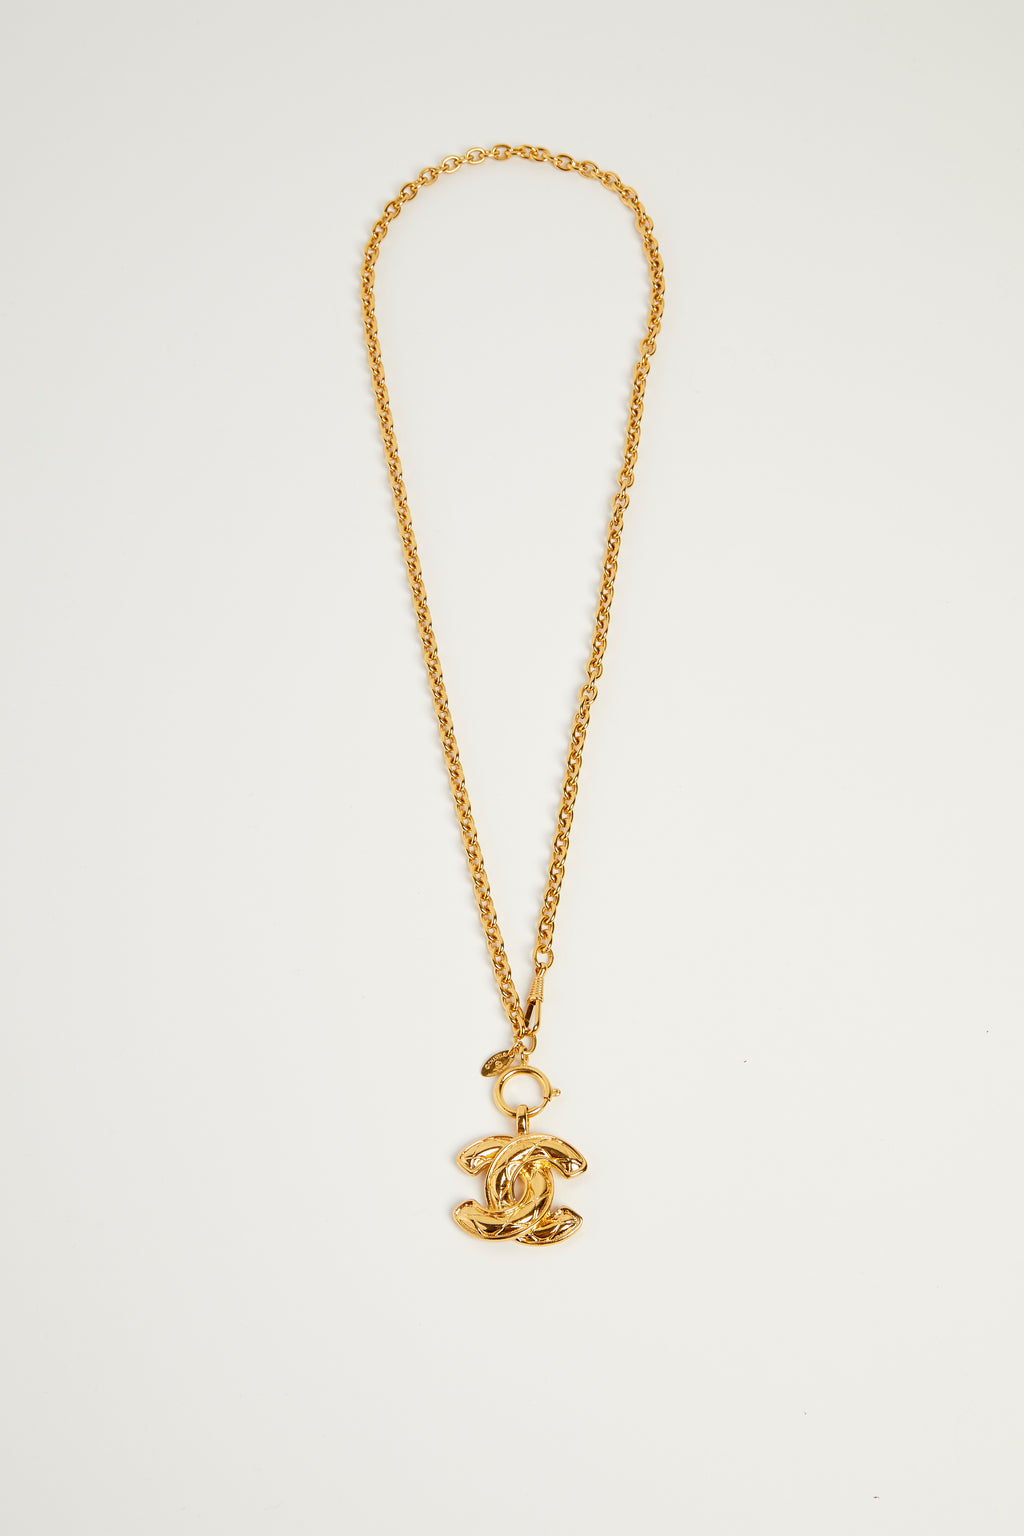 Vintage Chanel Large Gold CC Chain Necklace